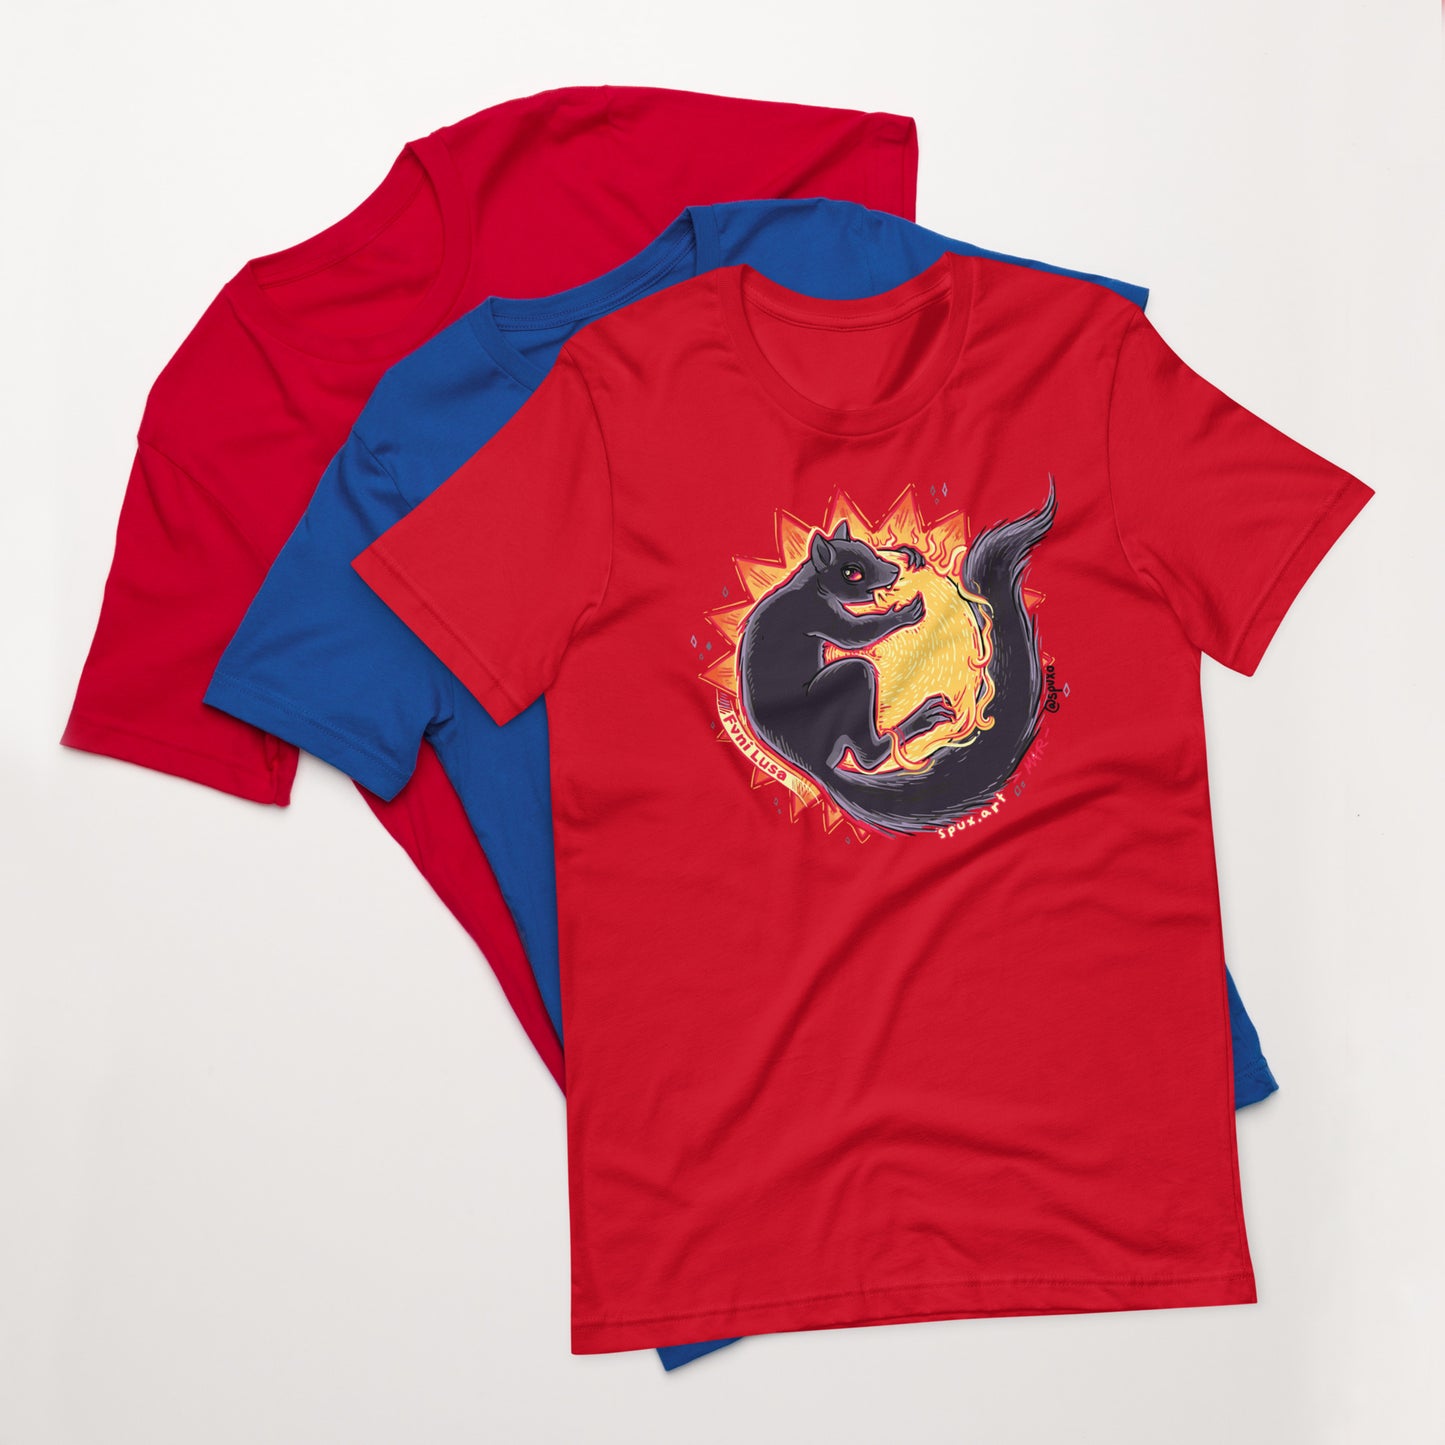 Fvni Lusa Choctaw Eclipse Shirt